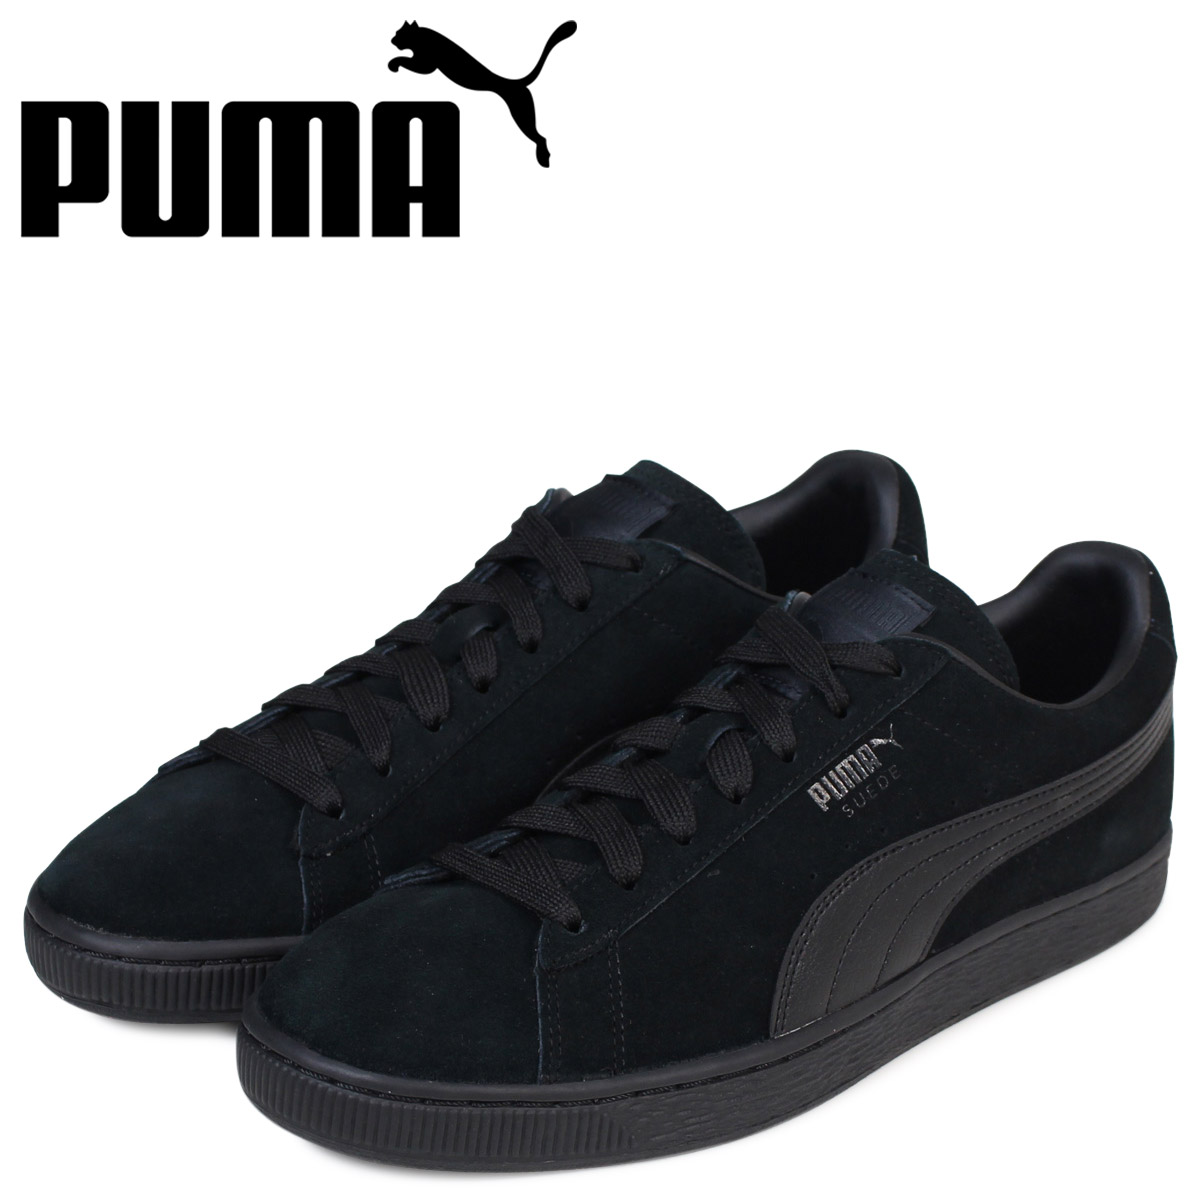 puma suede classic men's fashion sneakers shoes